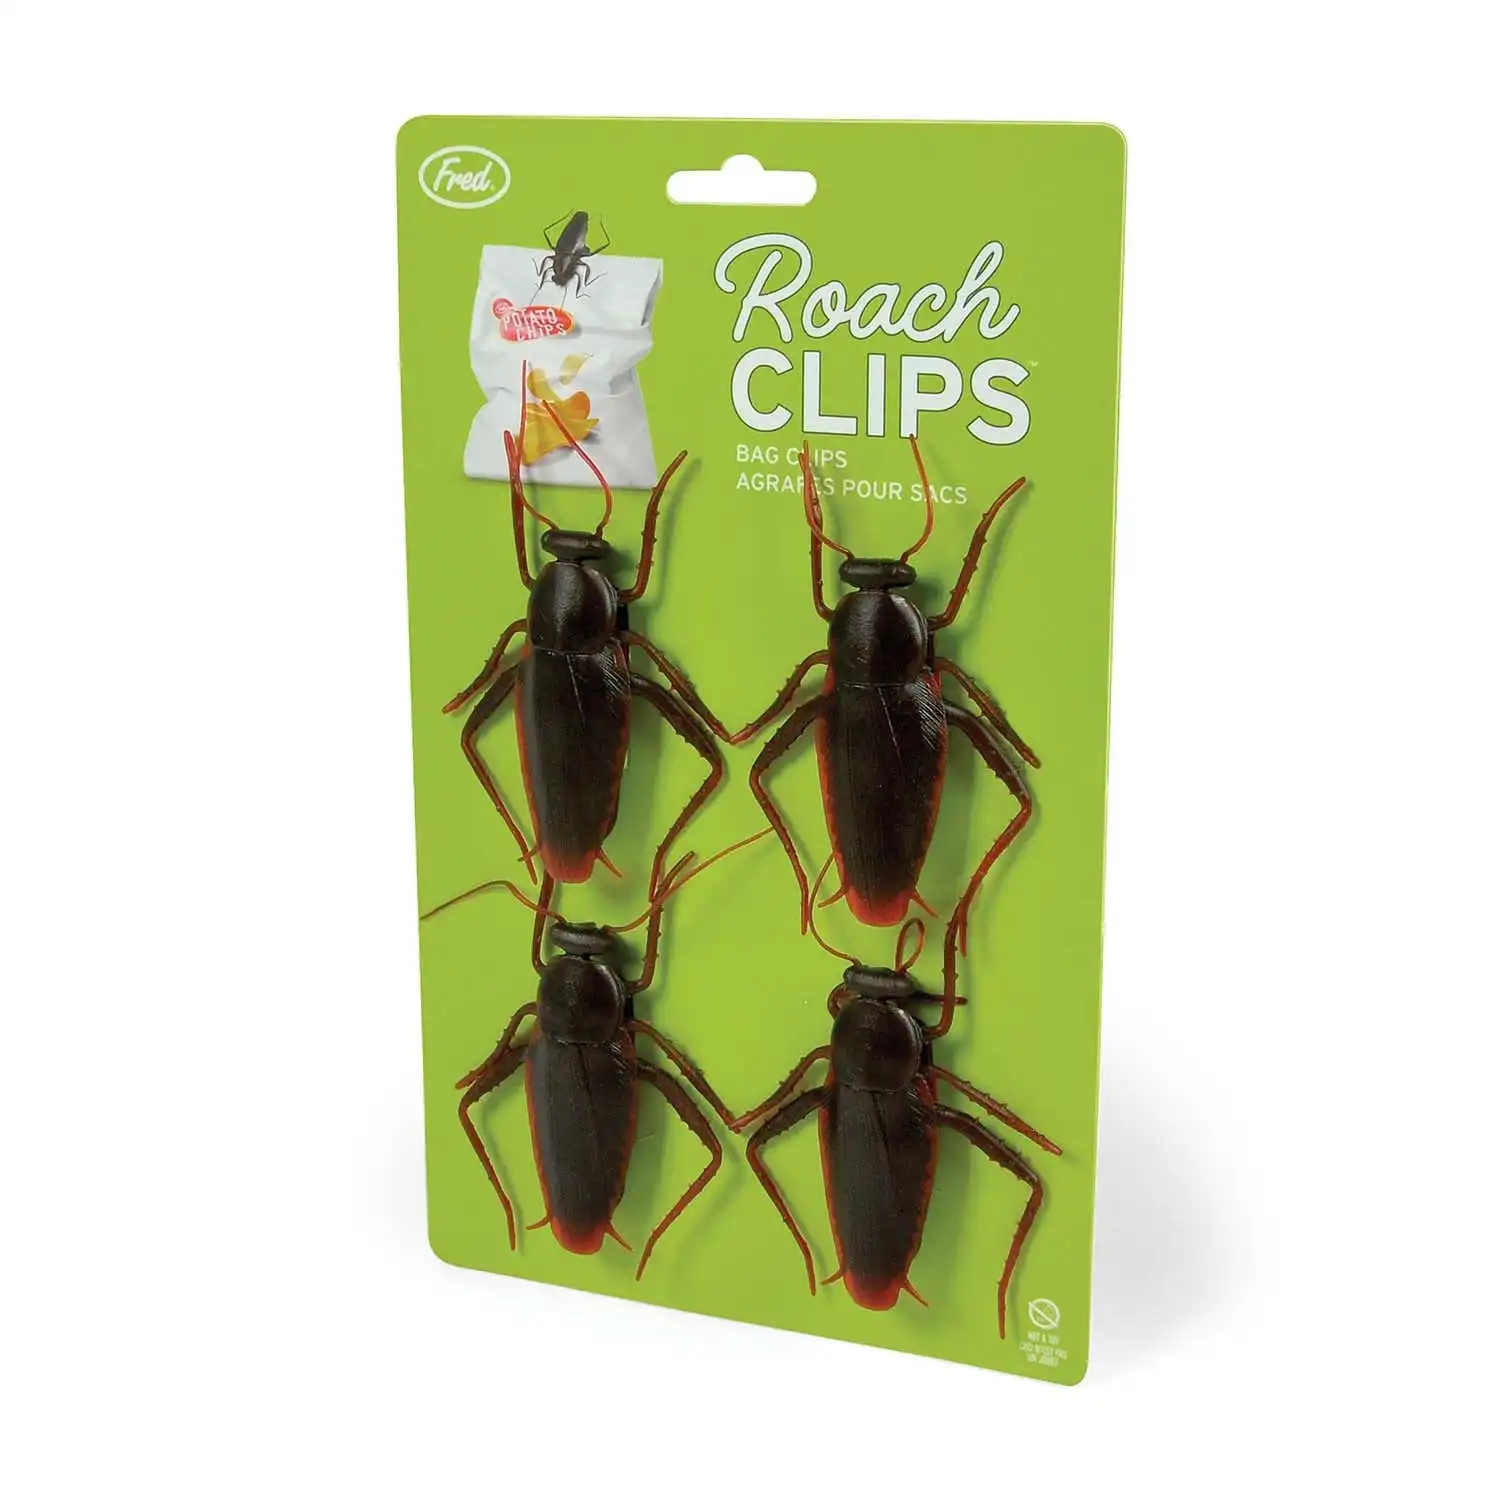 Roach Clips - Food Bag Clips